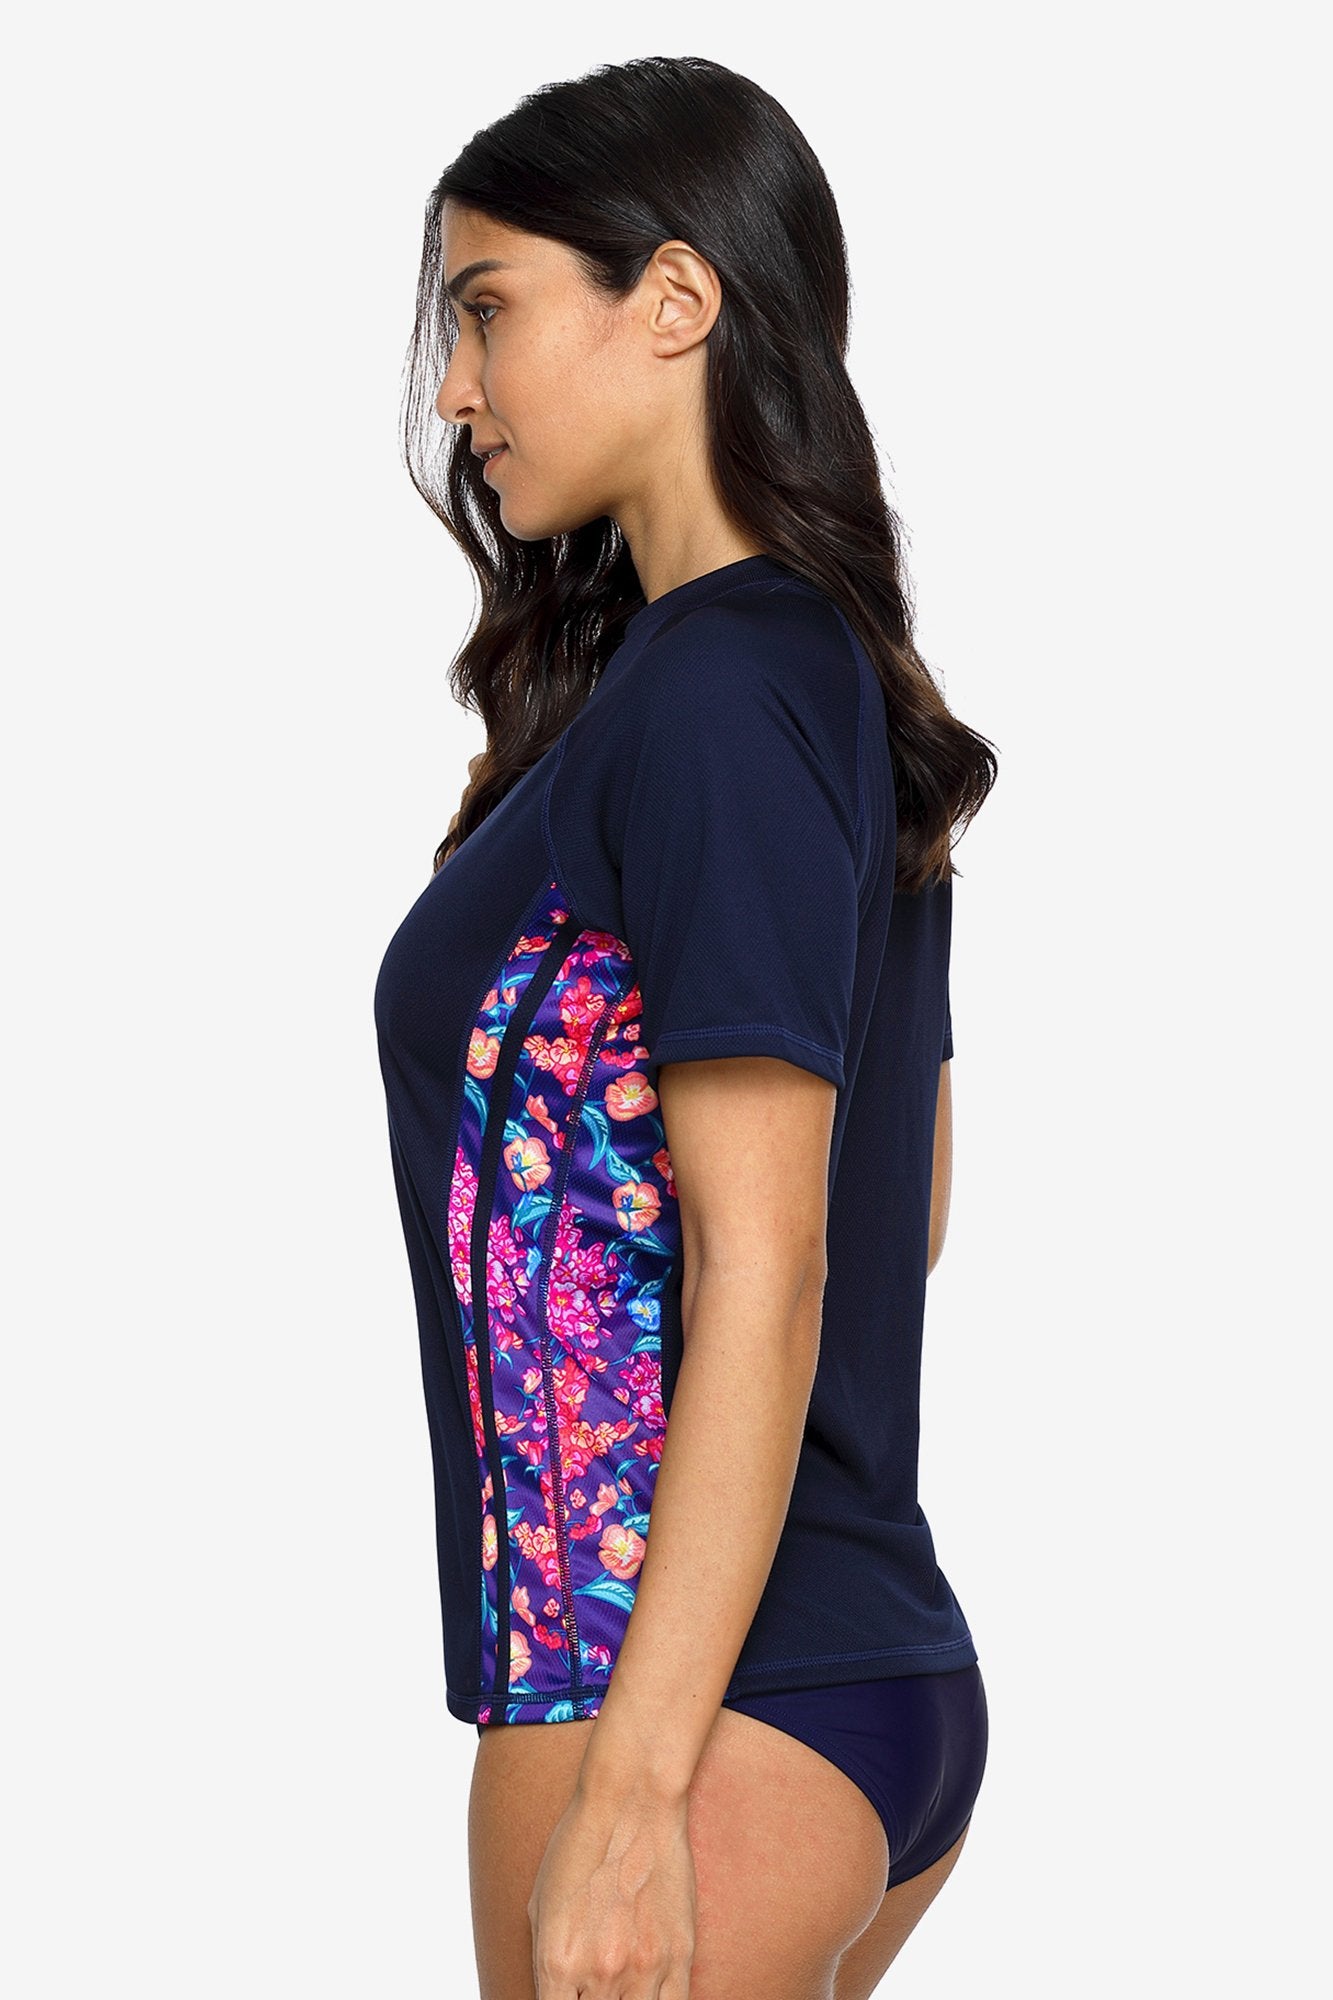 Women's Navy Floral Printed Short Sleeve UPF 50+ Rashguard Swim Shirt-Attraco | Fashion Outdoor Clothing